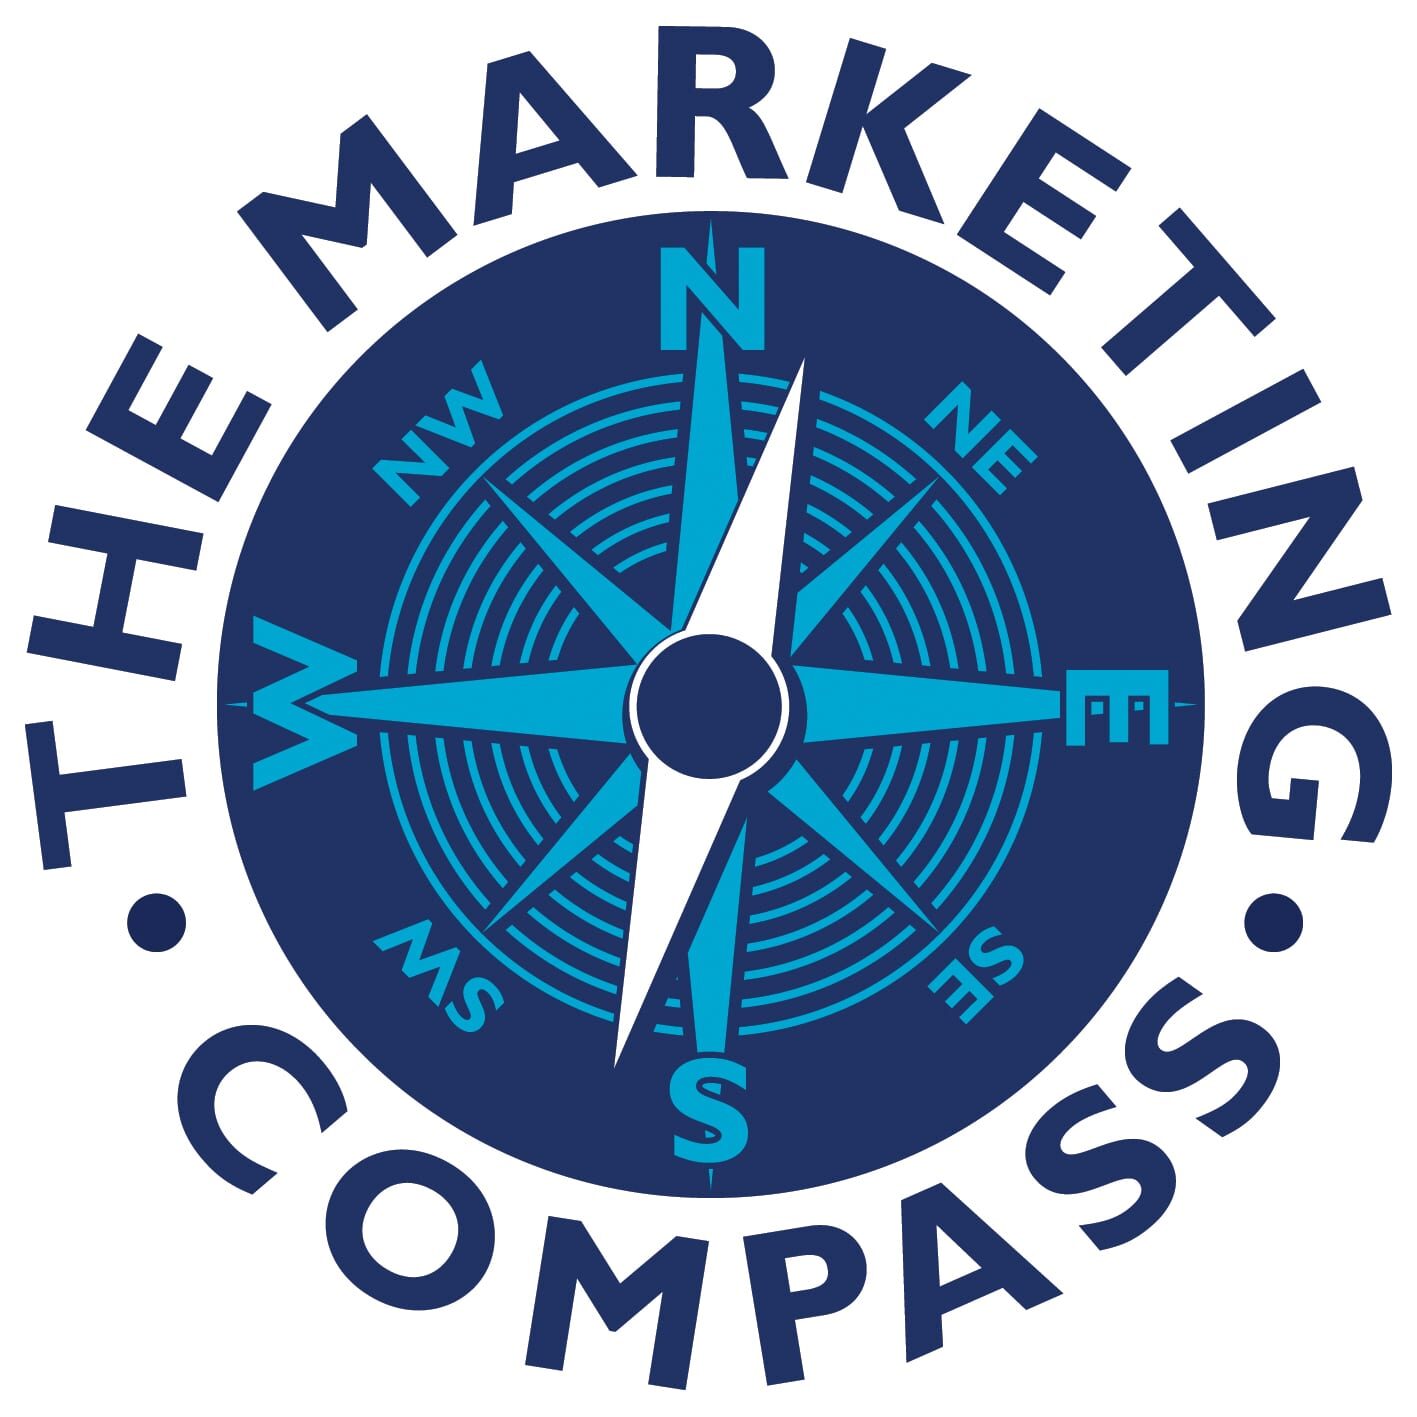 The Marketing Compass logo